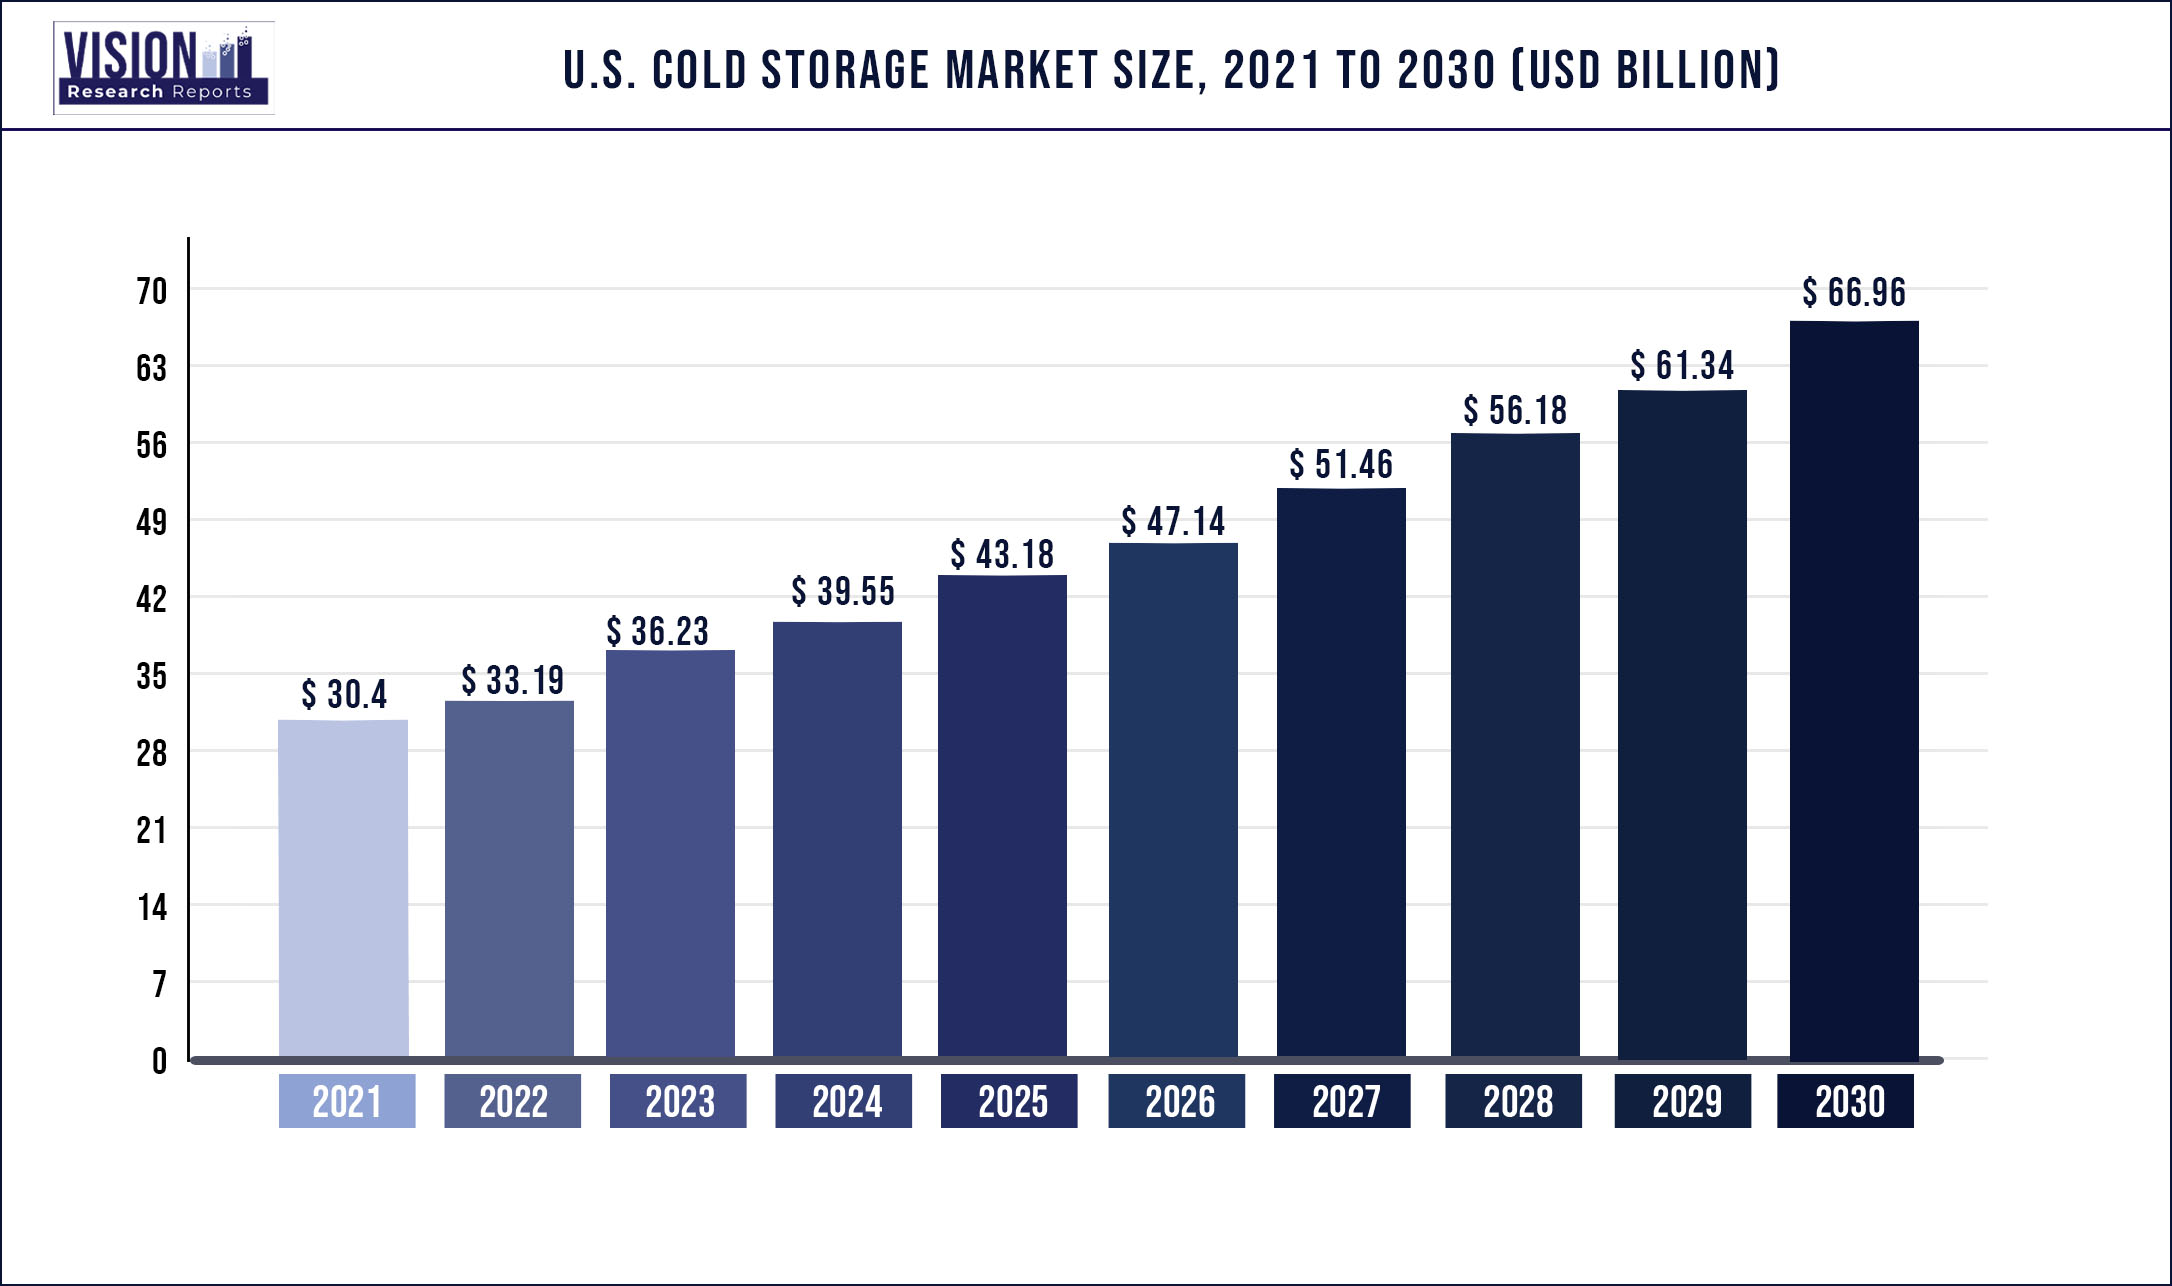 U.S. Cold Storage Market Size 2021 to 2030